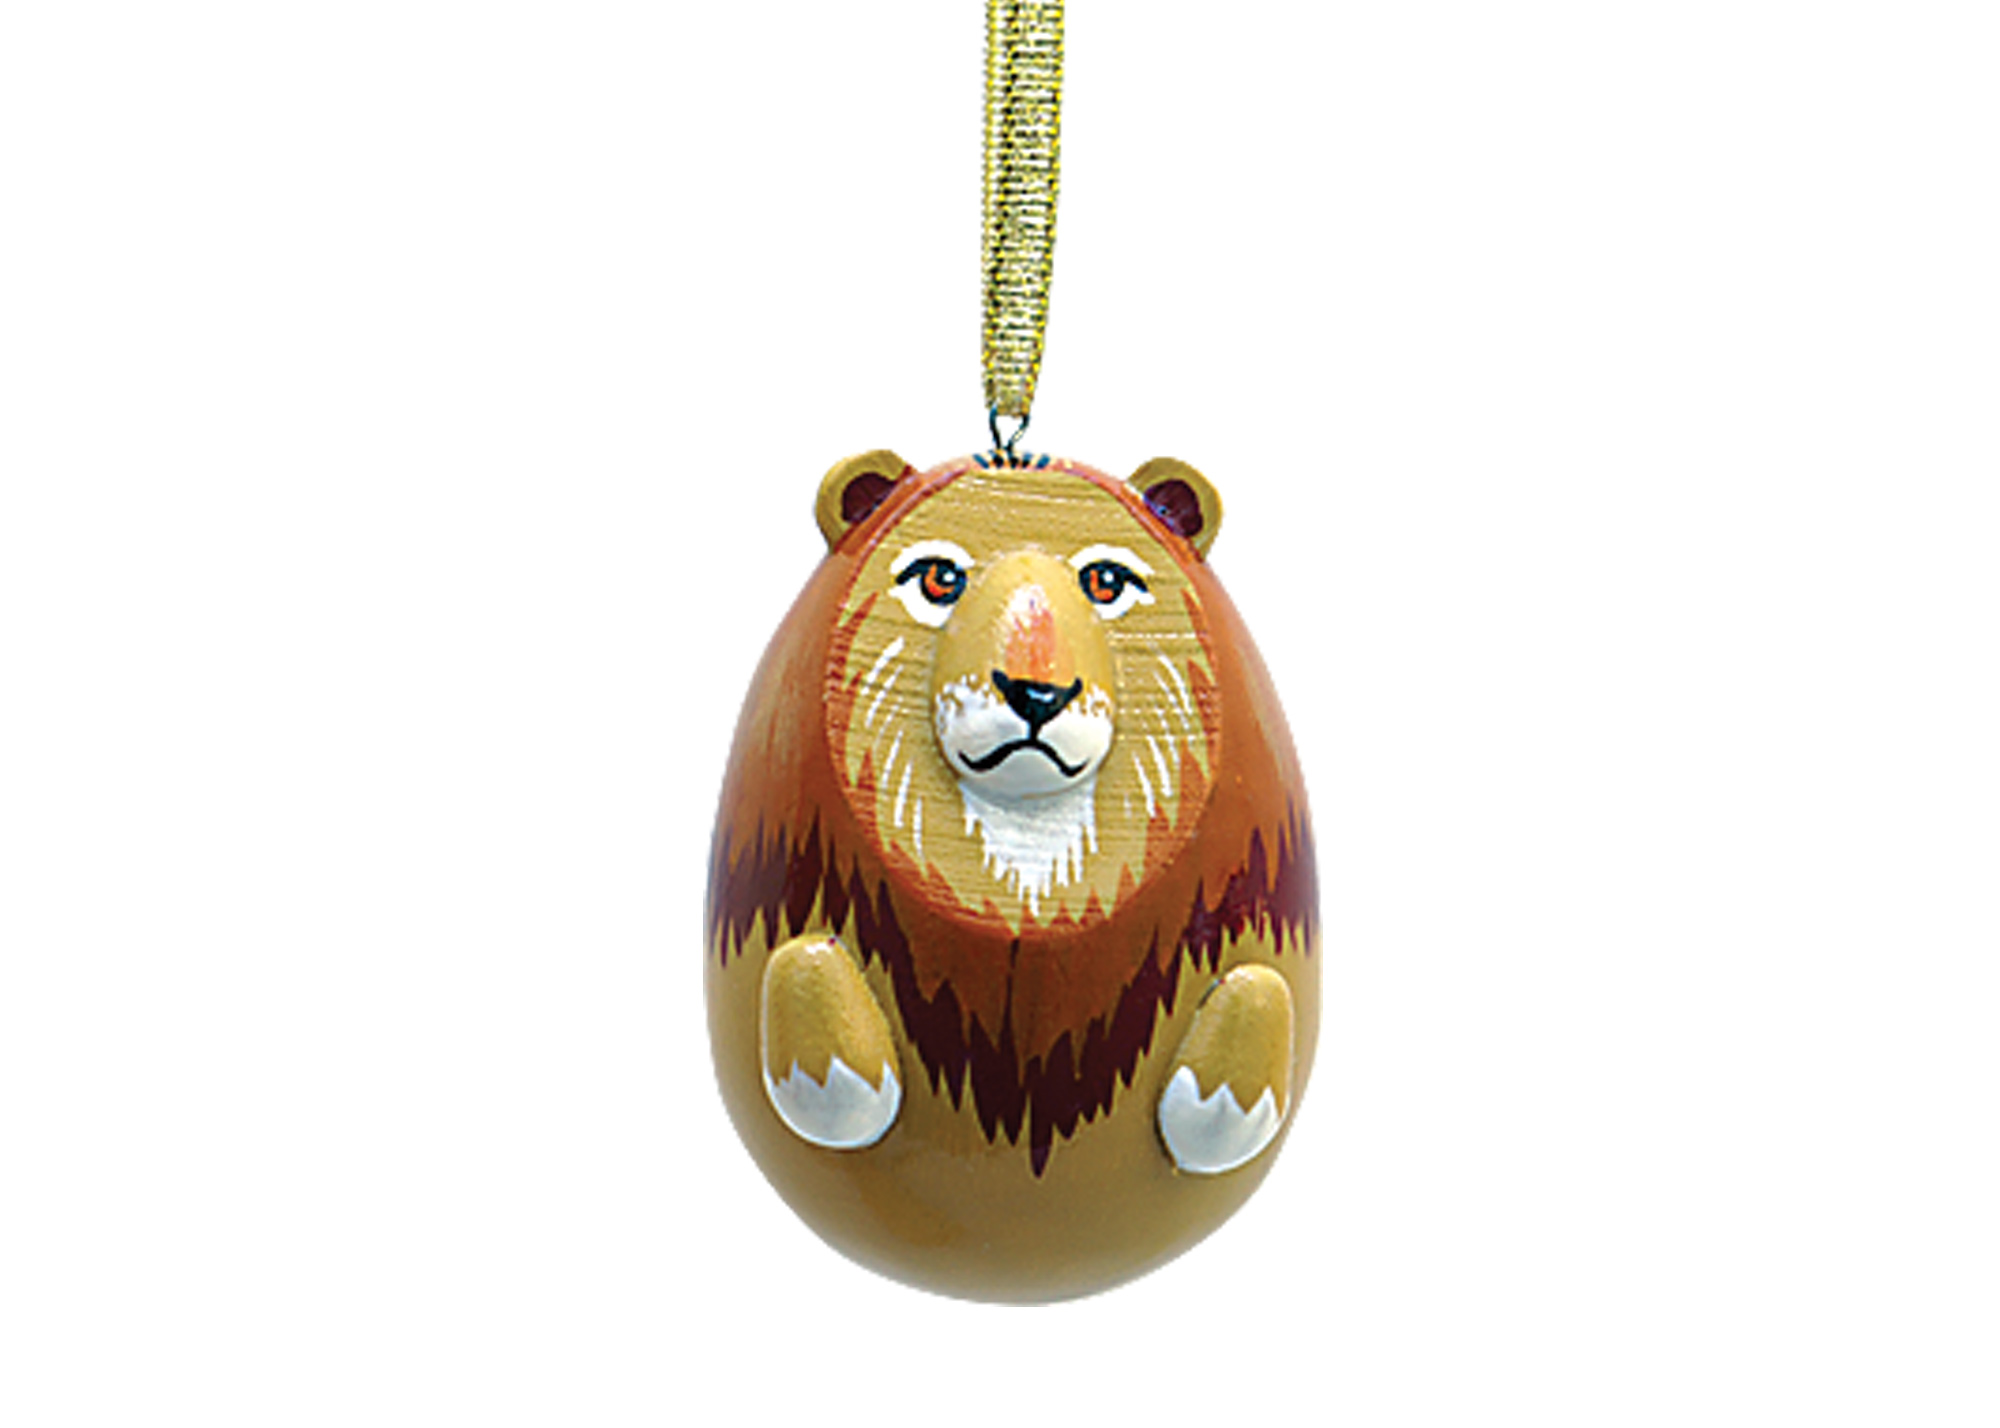 Buy Lion Ornament 2" at GoldenCockerel.com